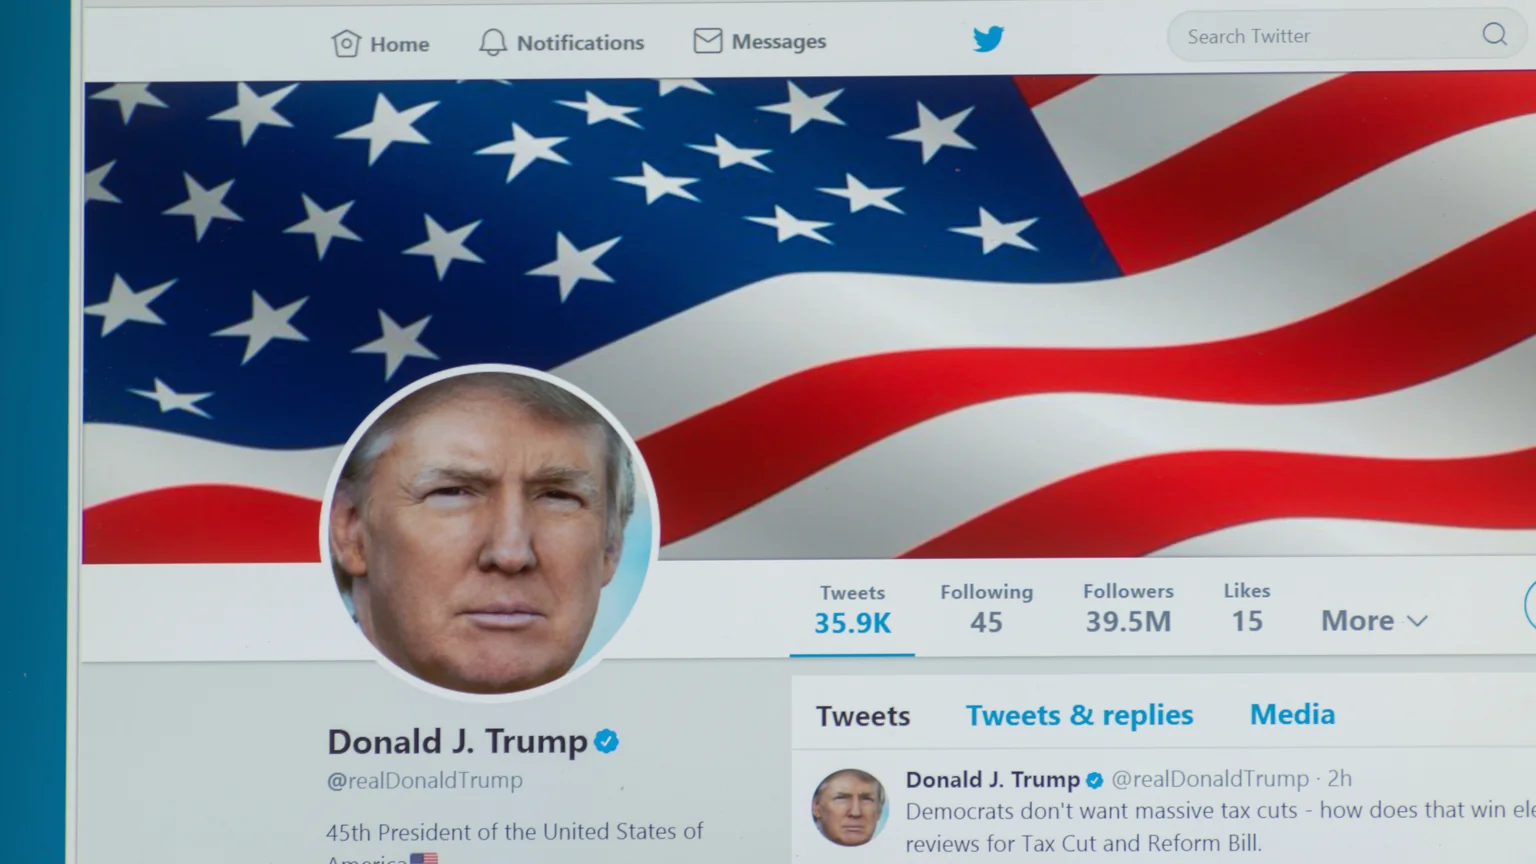 Donald Trump's Twitter profile